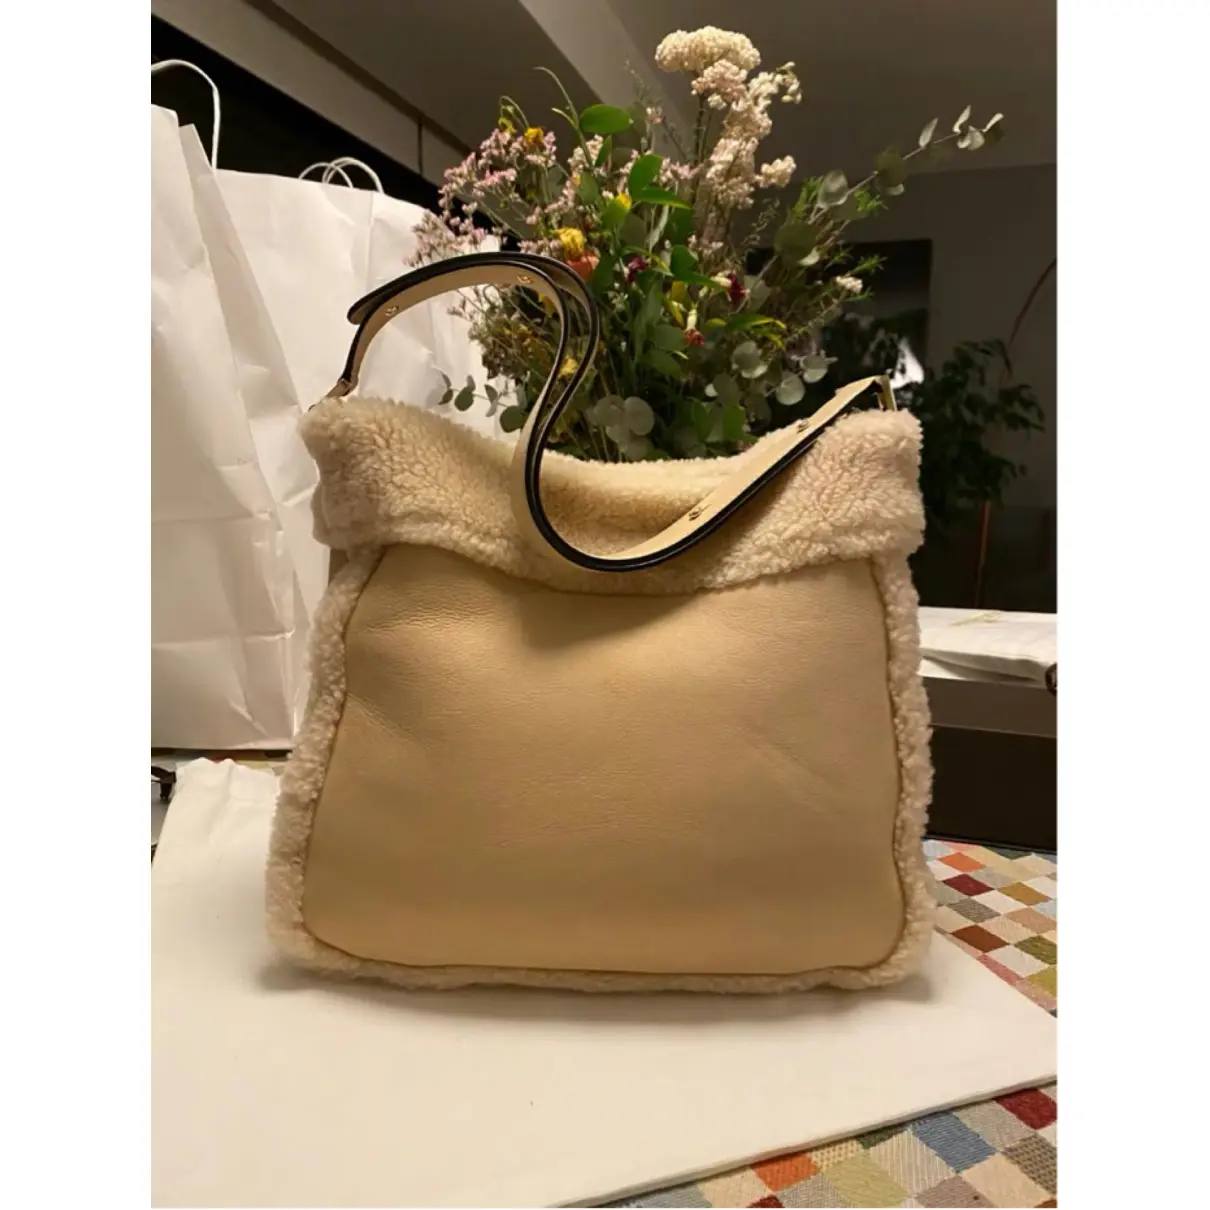 Buy Delvaux Pin leather handbag online